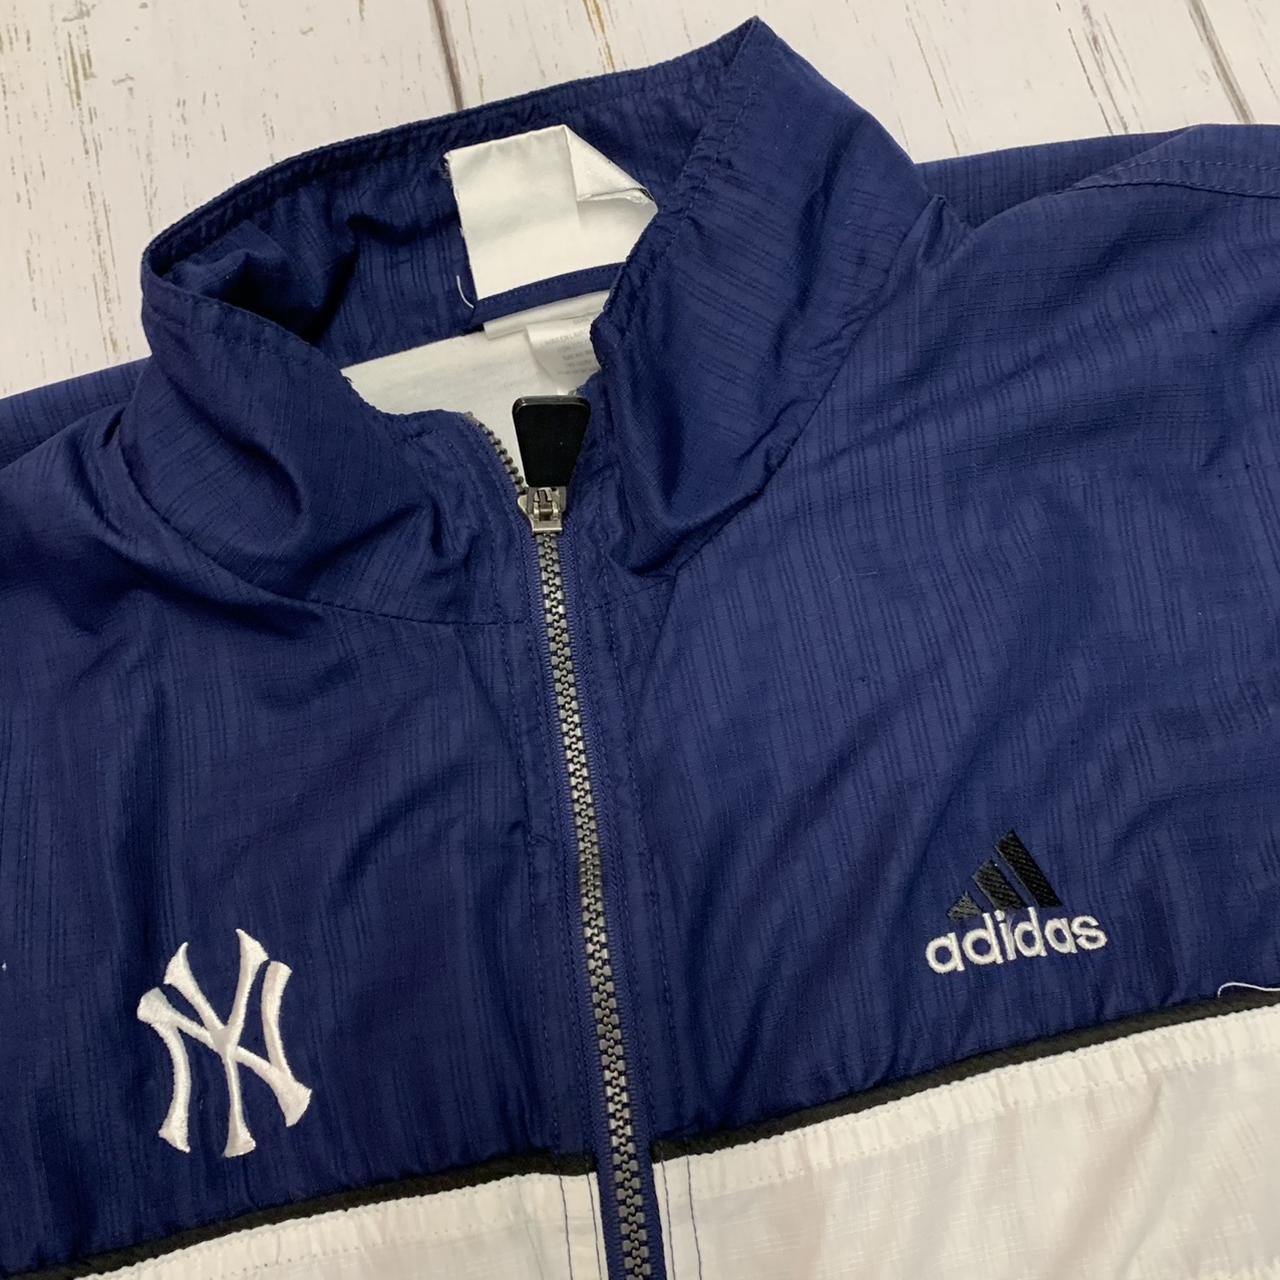 Vintage 90s Adidas New York Yankees Basketball - Depop